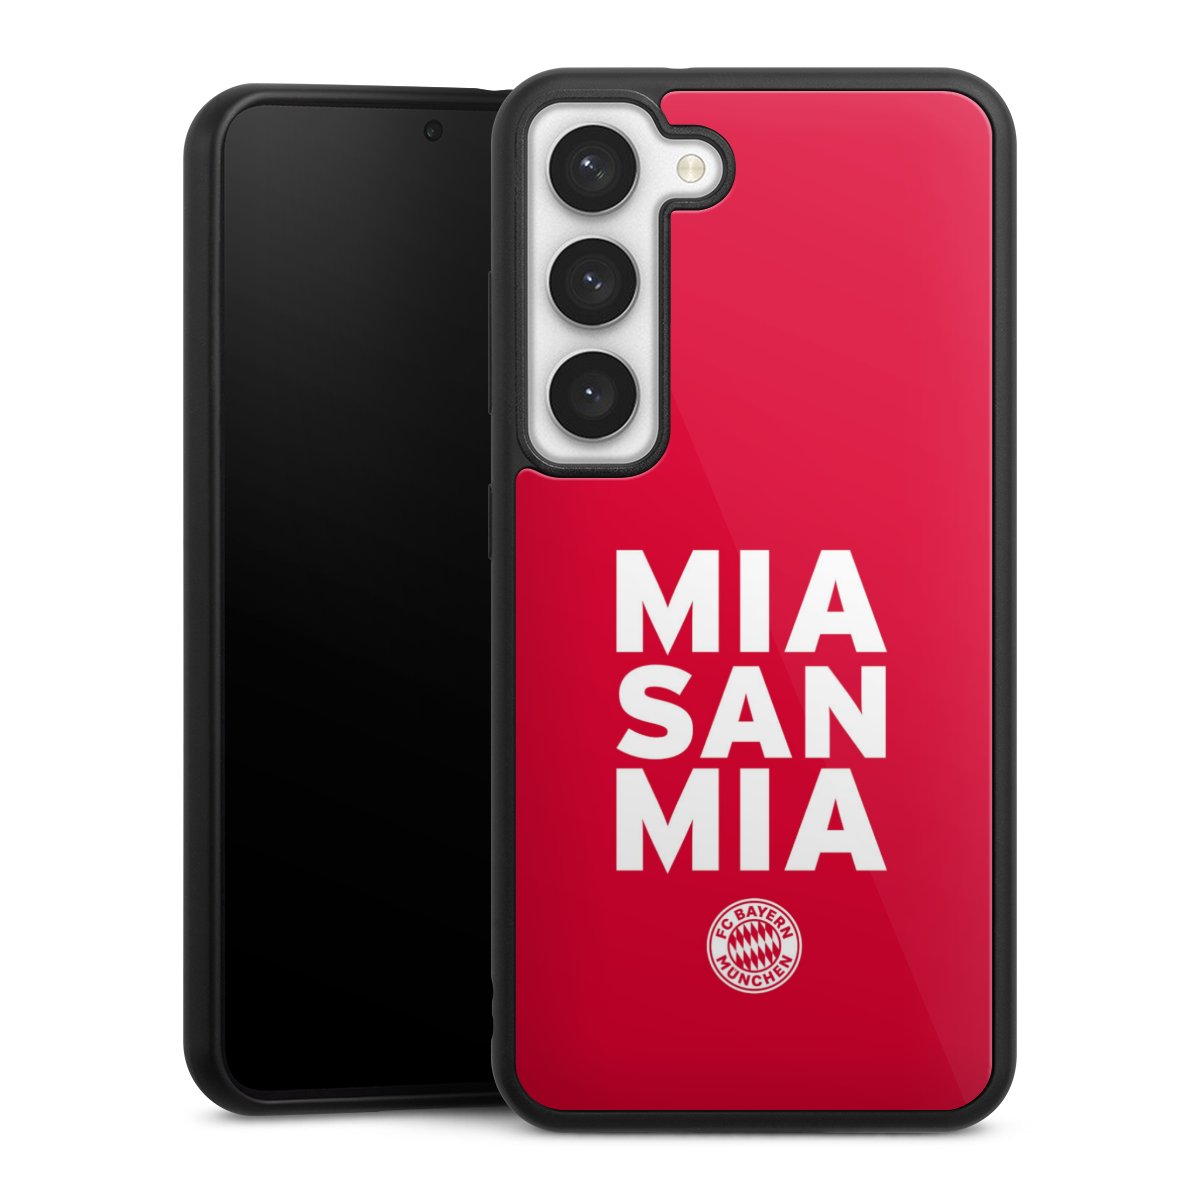 Mia San Mia FCB rouge